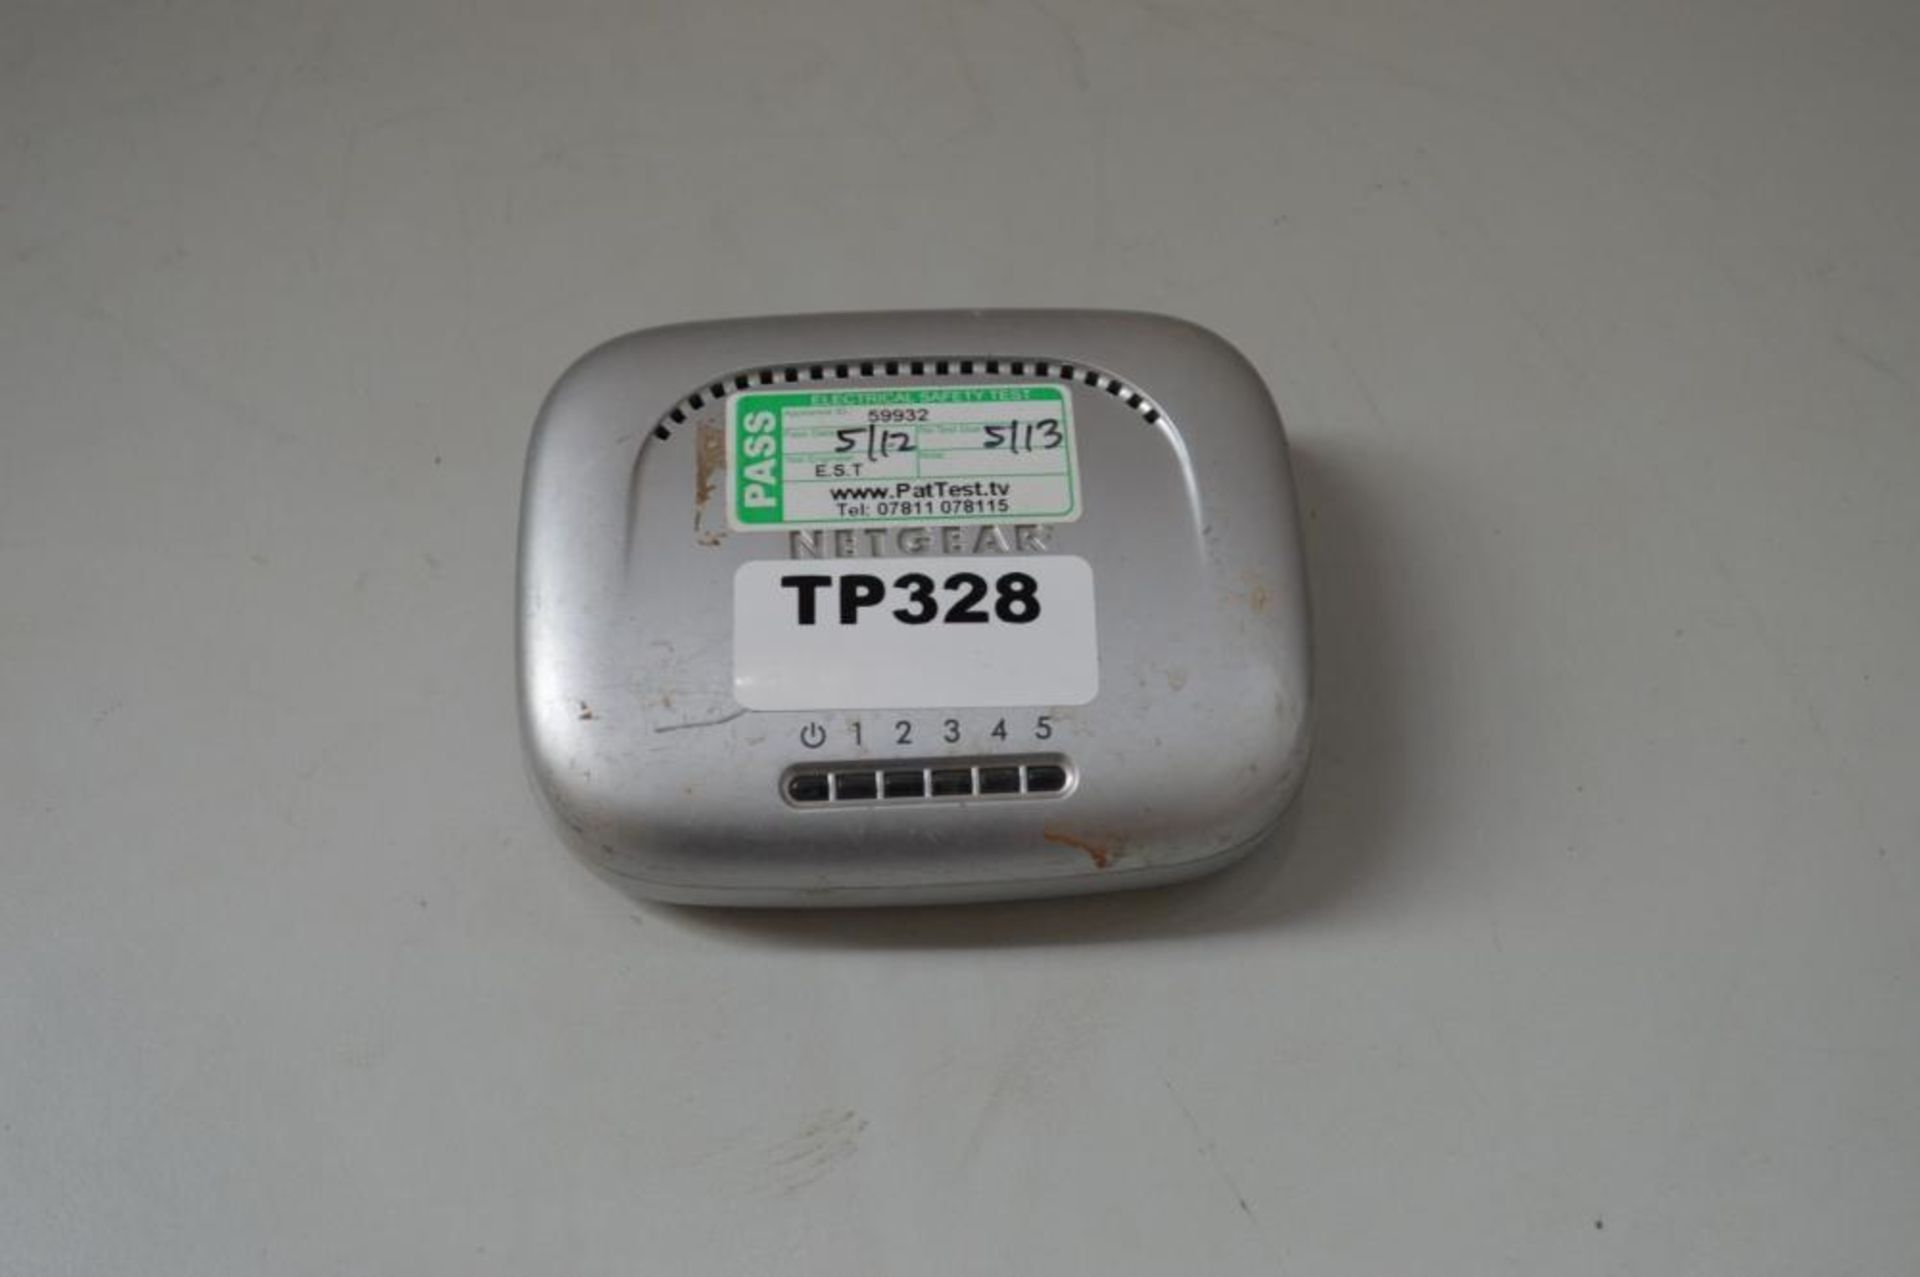 1 x Netgear Switch FS605 - Ref TP328 - CL394 - Location: Altrincham WA14 - HKPal4 As per our